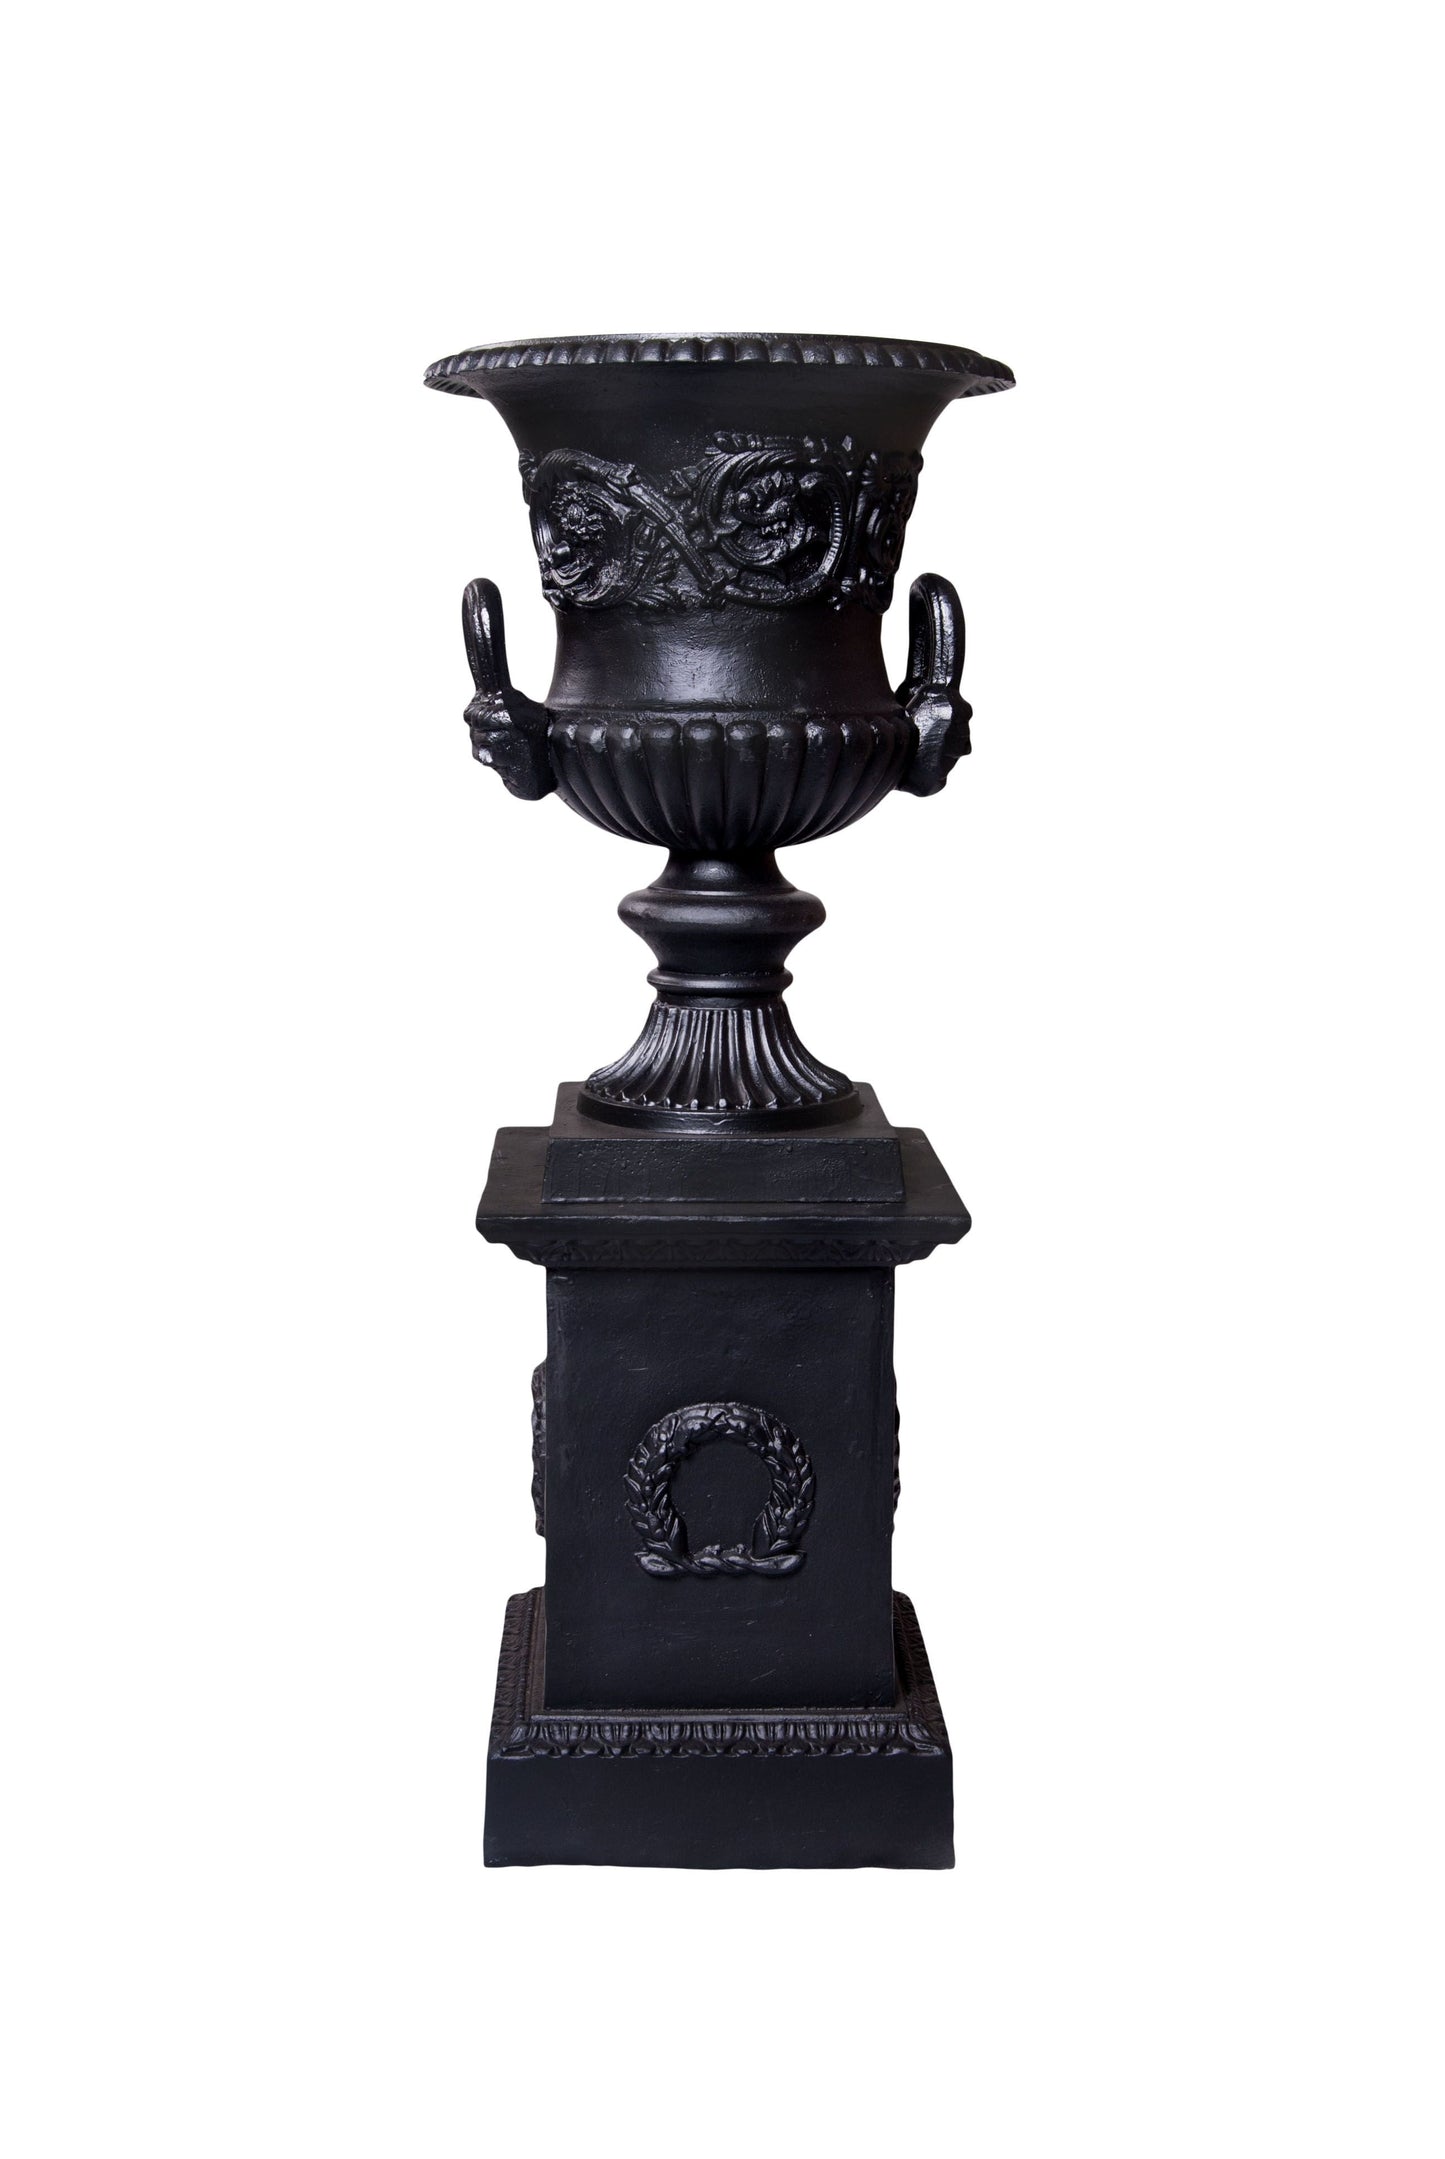 Cast Iron Dorchester Urn & Pedestal Urn and Pedestal Small Black